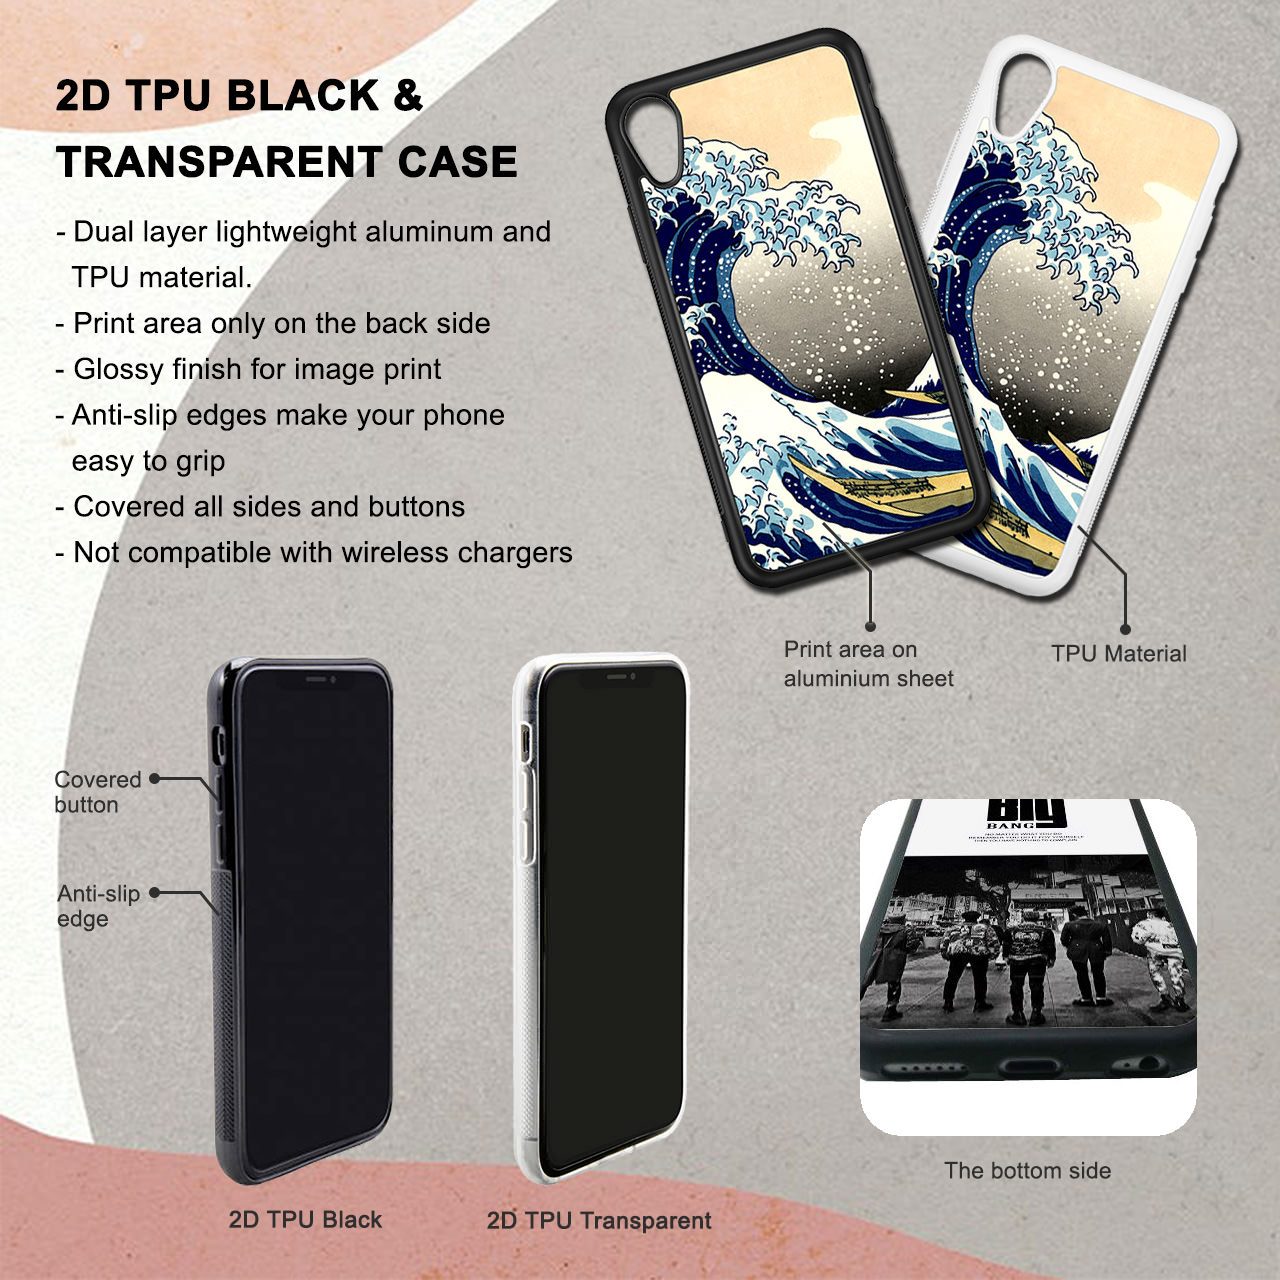 Zorojuro iPhone 6 / 6s Plus Case